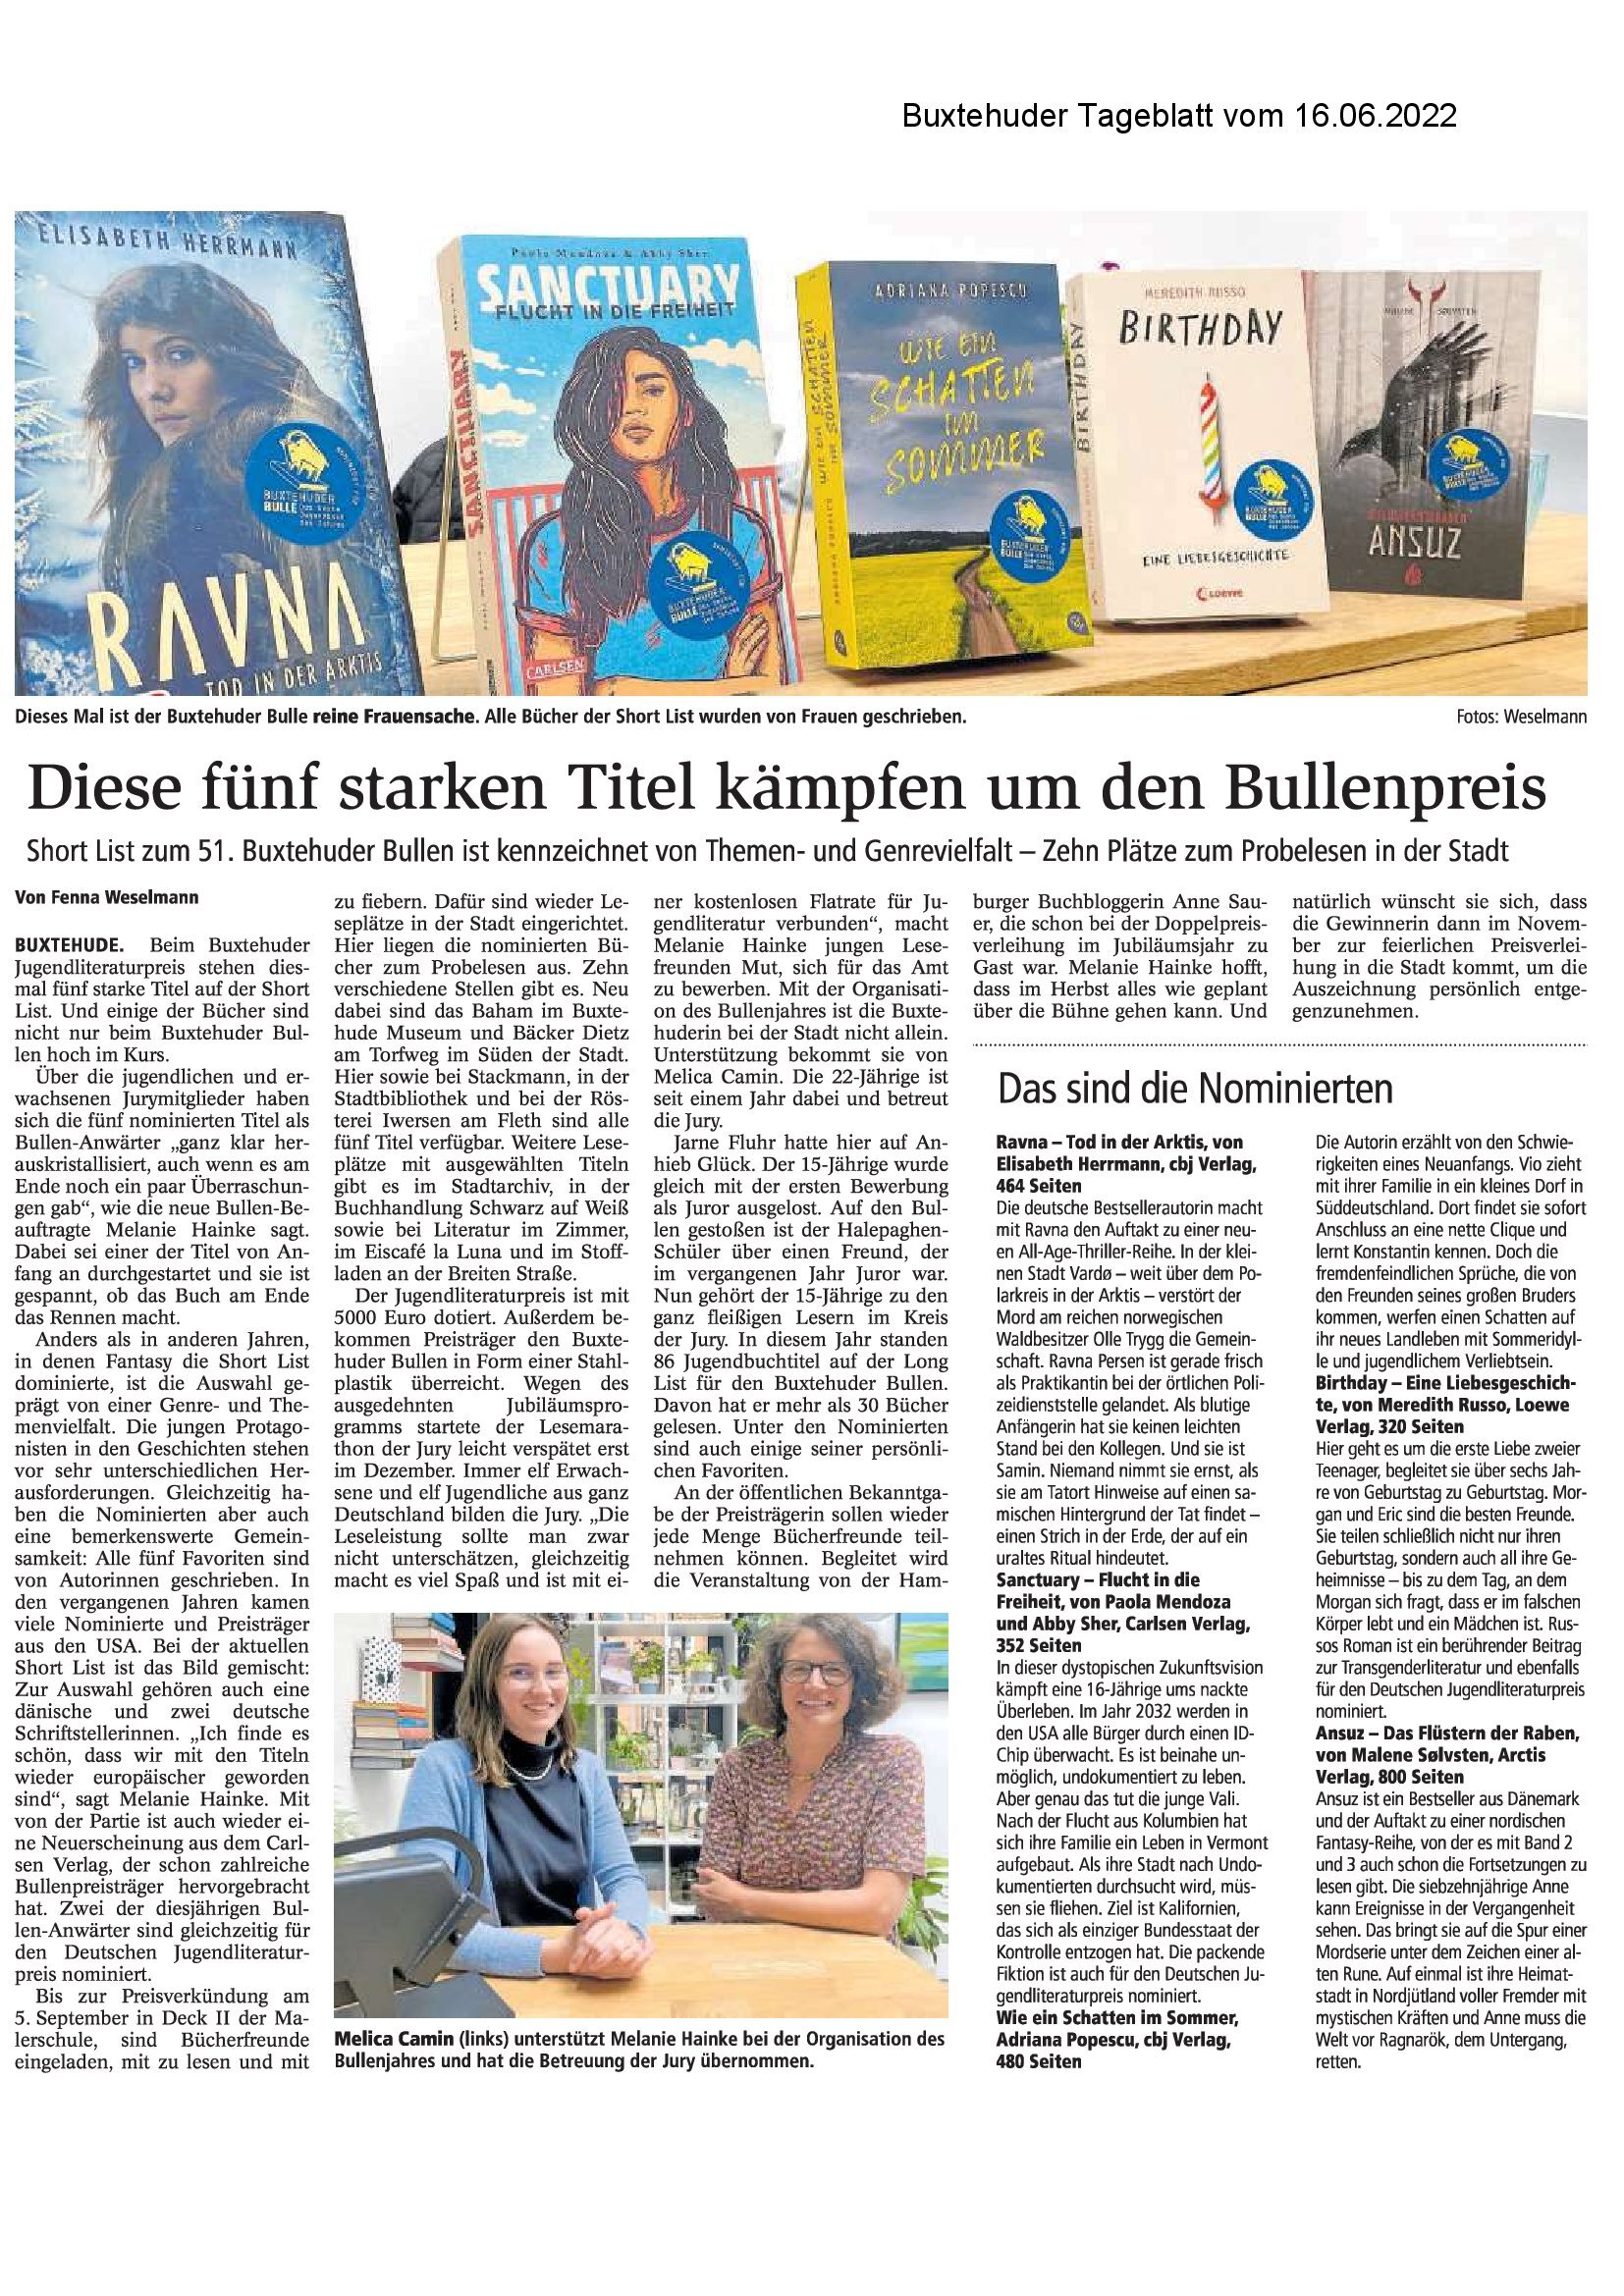 Buxtehuder Bulle Tageblatt 16 06 22